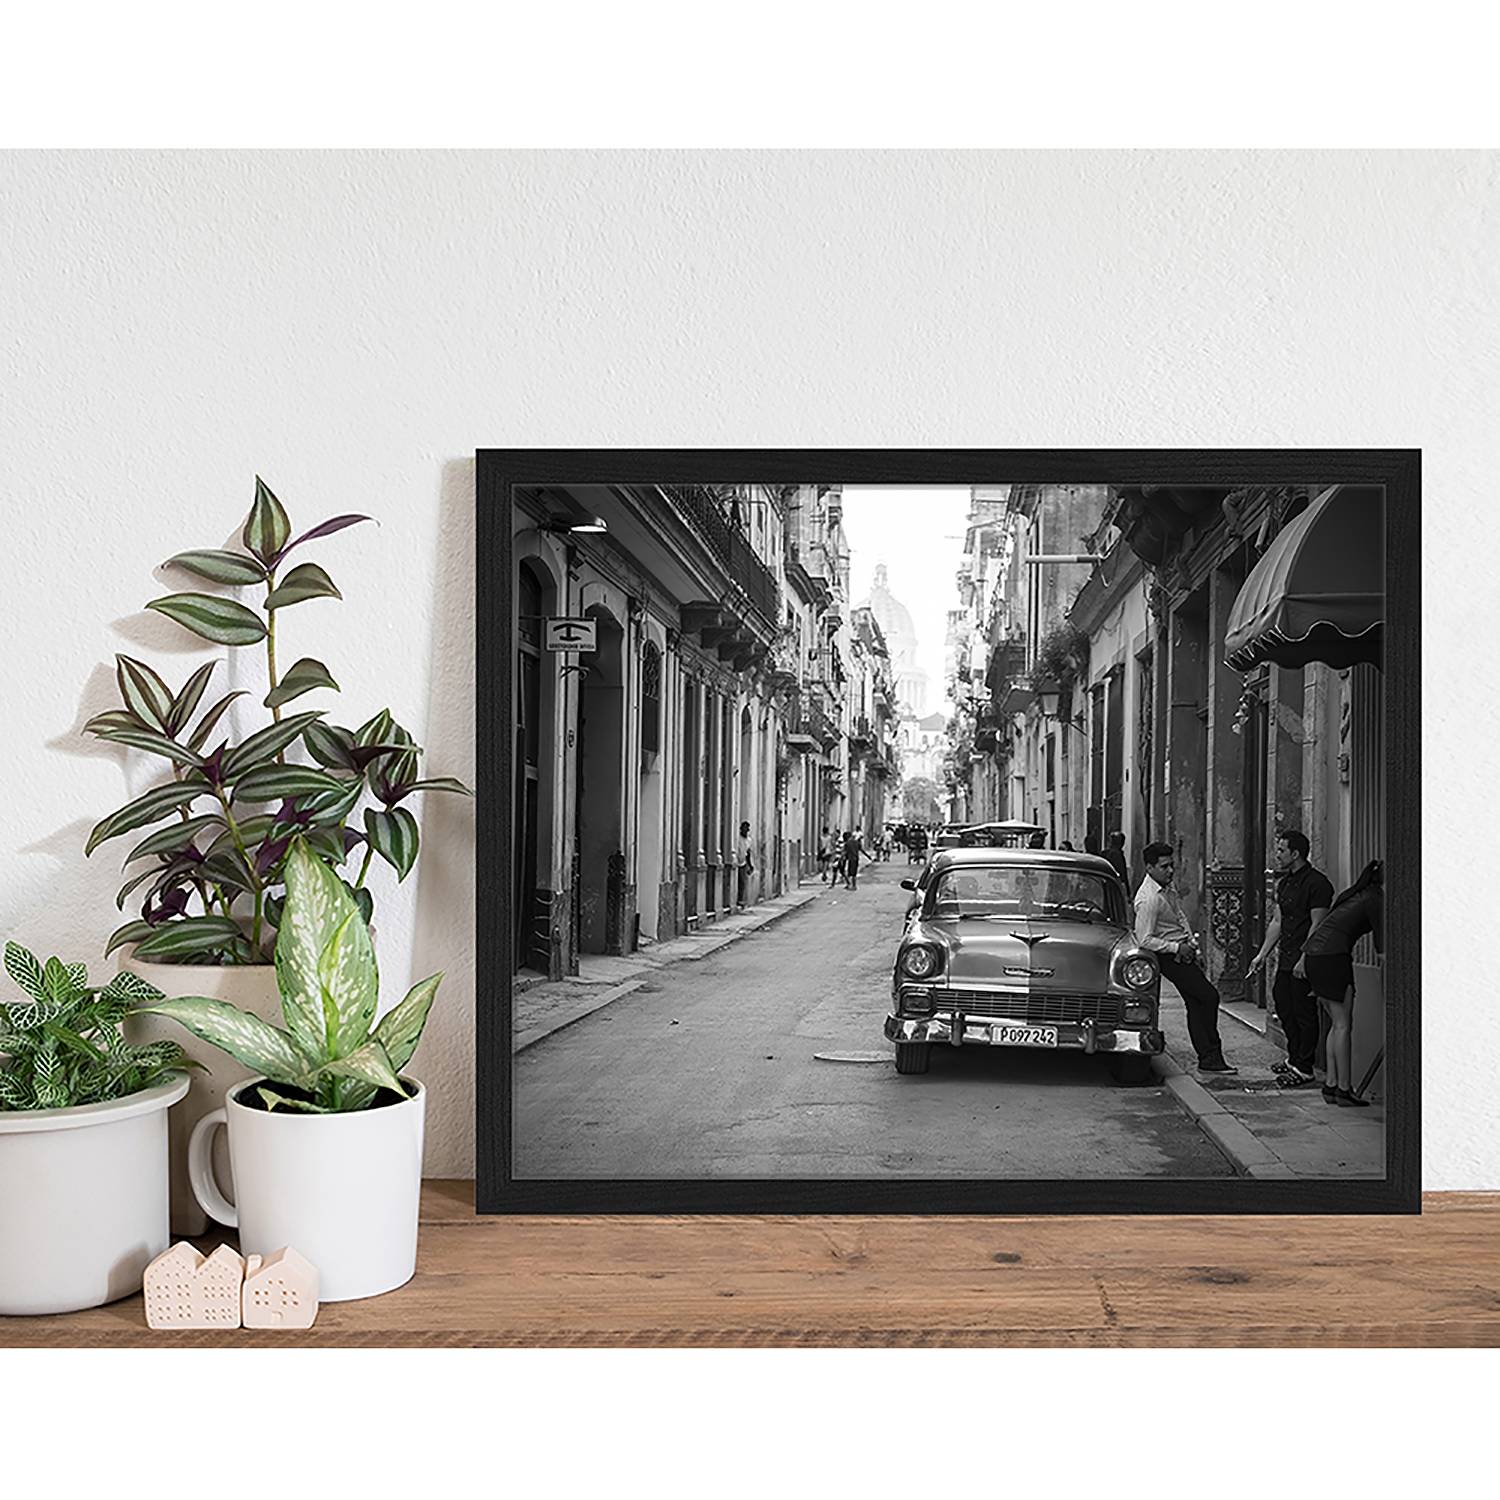 Image of Tableau déco 1950s Chevy in Havana, Cuba 000000001000280129